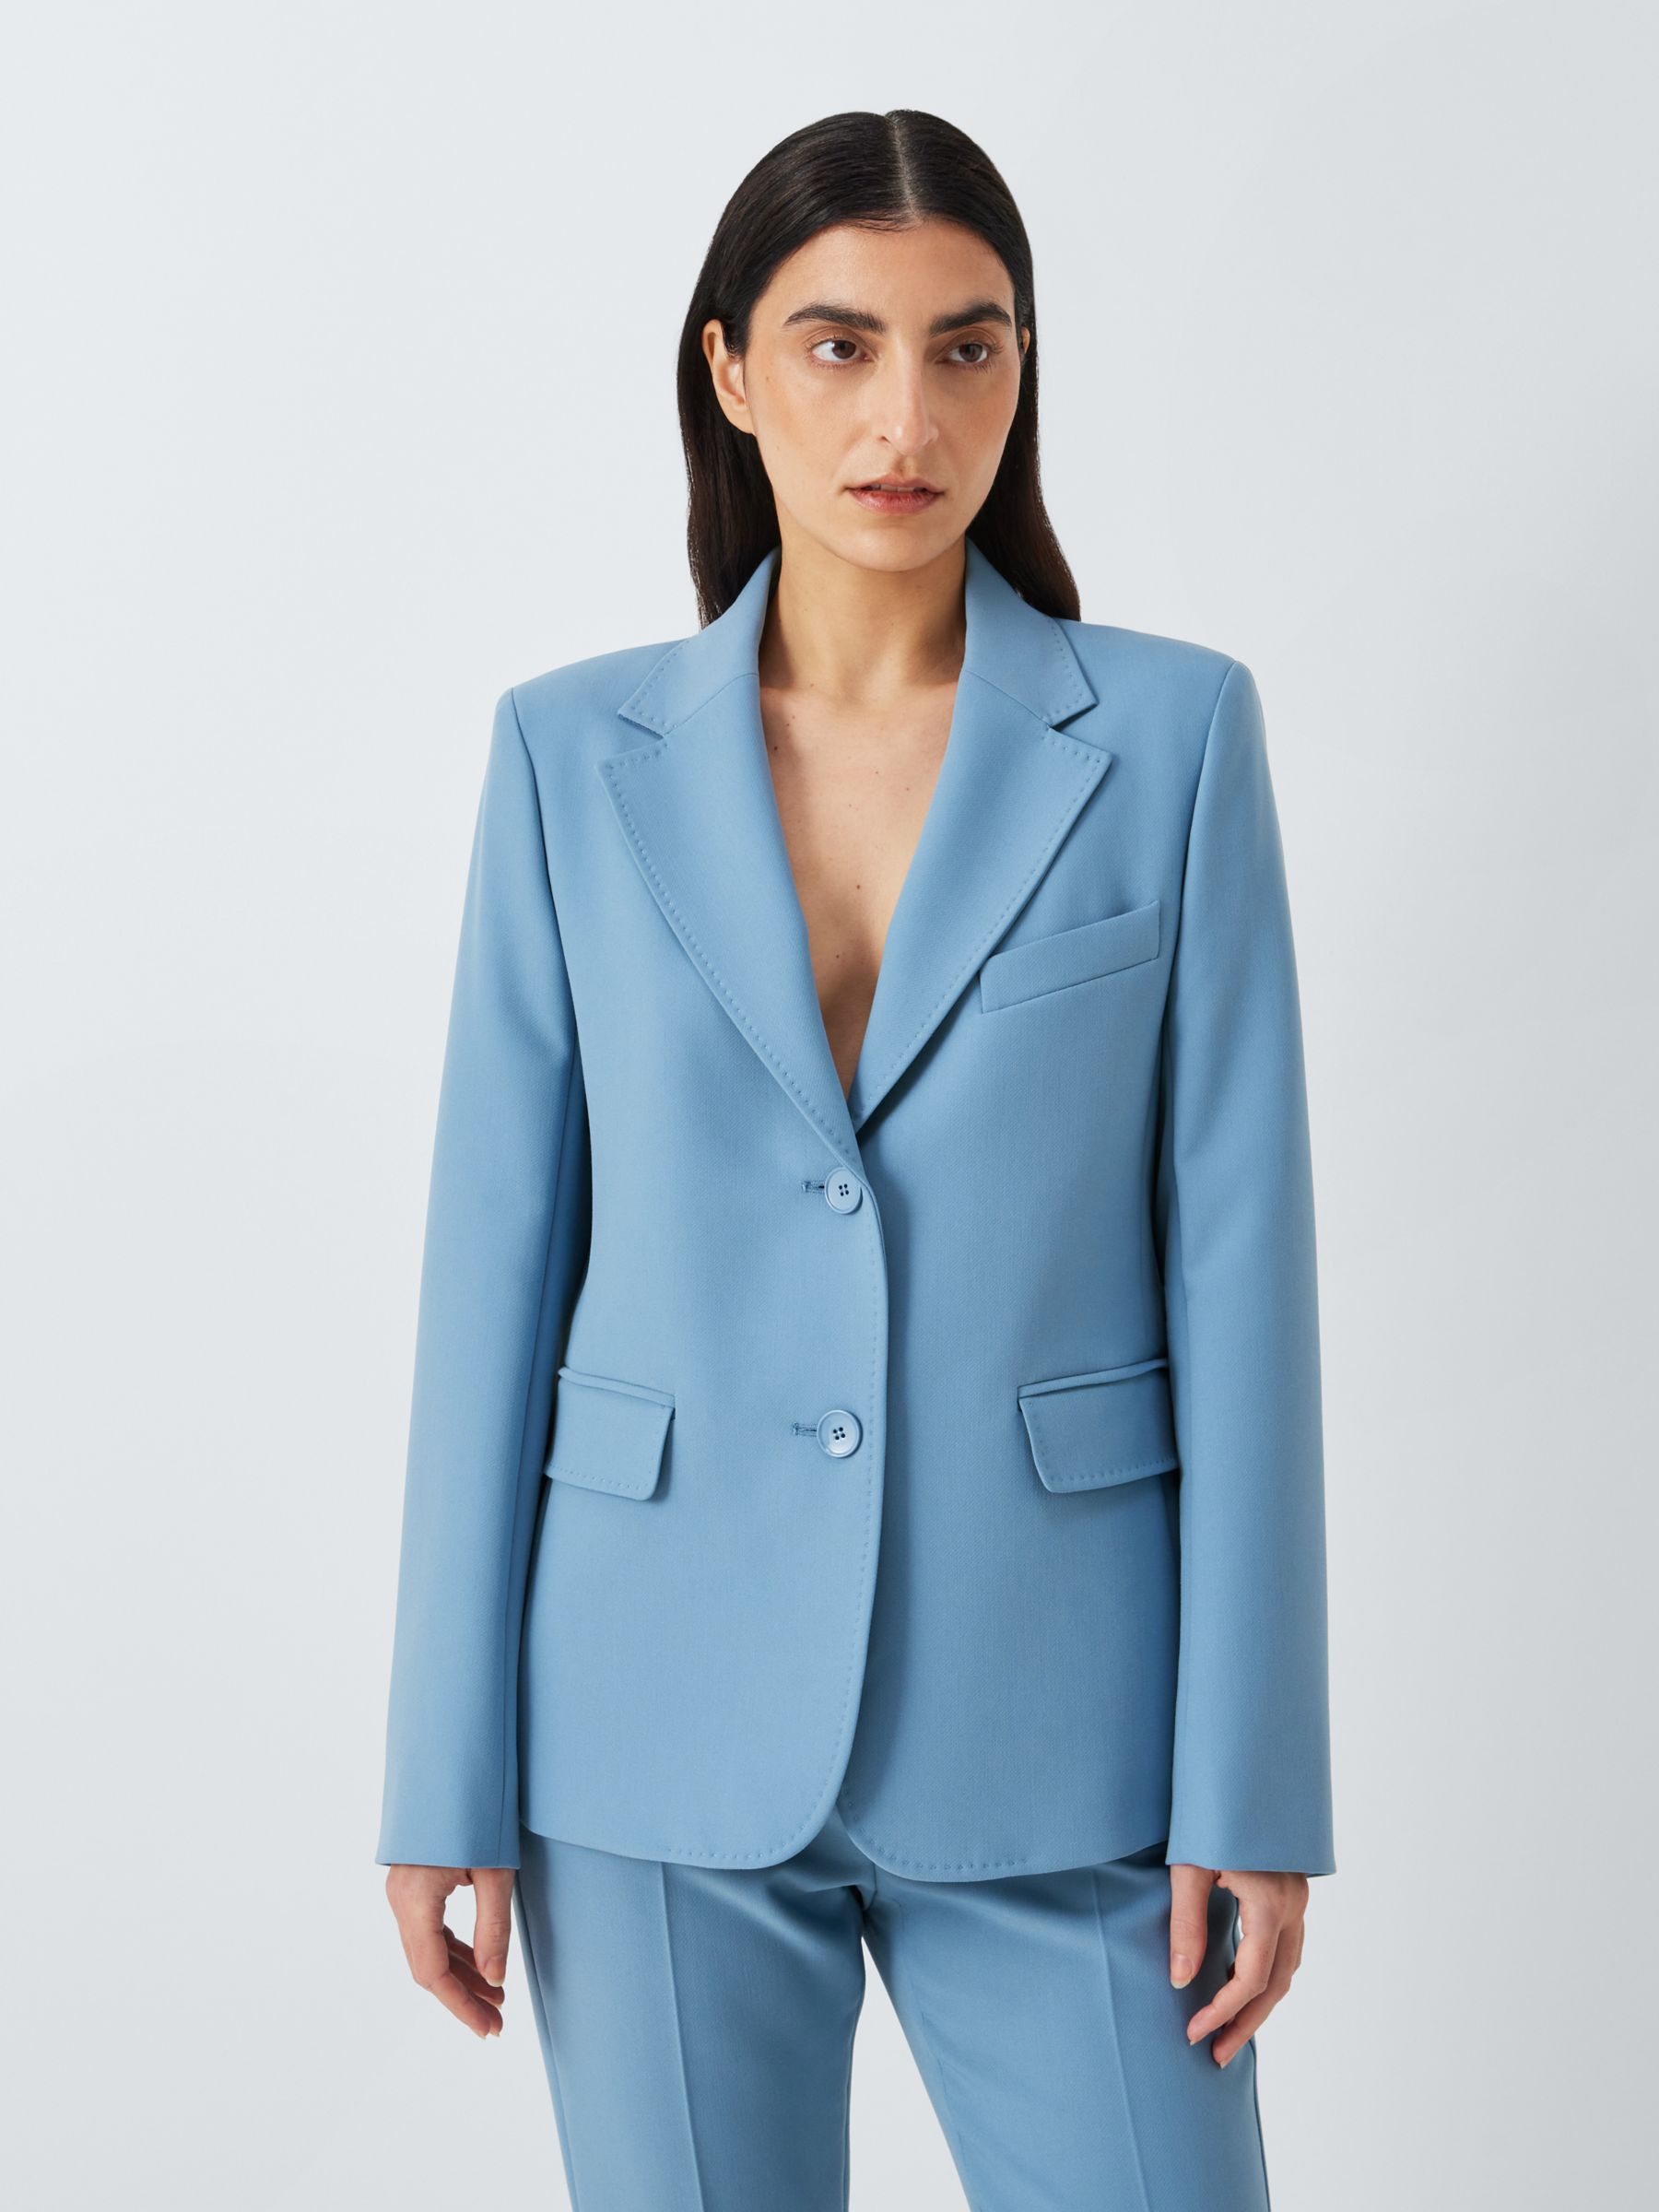 WELLINGTON SUITS Women's Elegant Stylish Office Fashion Light Blue Sky Blue  Blazer Jacket & Pants Suit Set